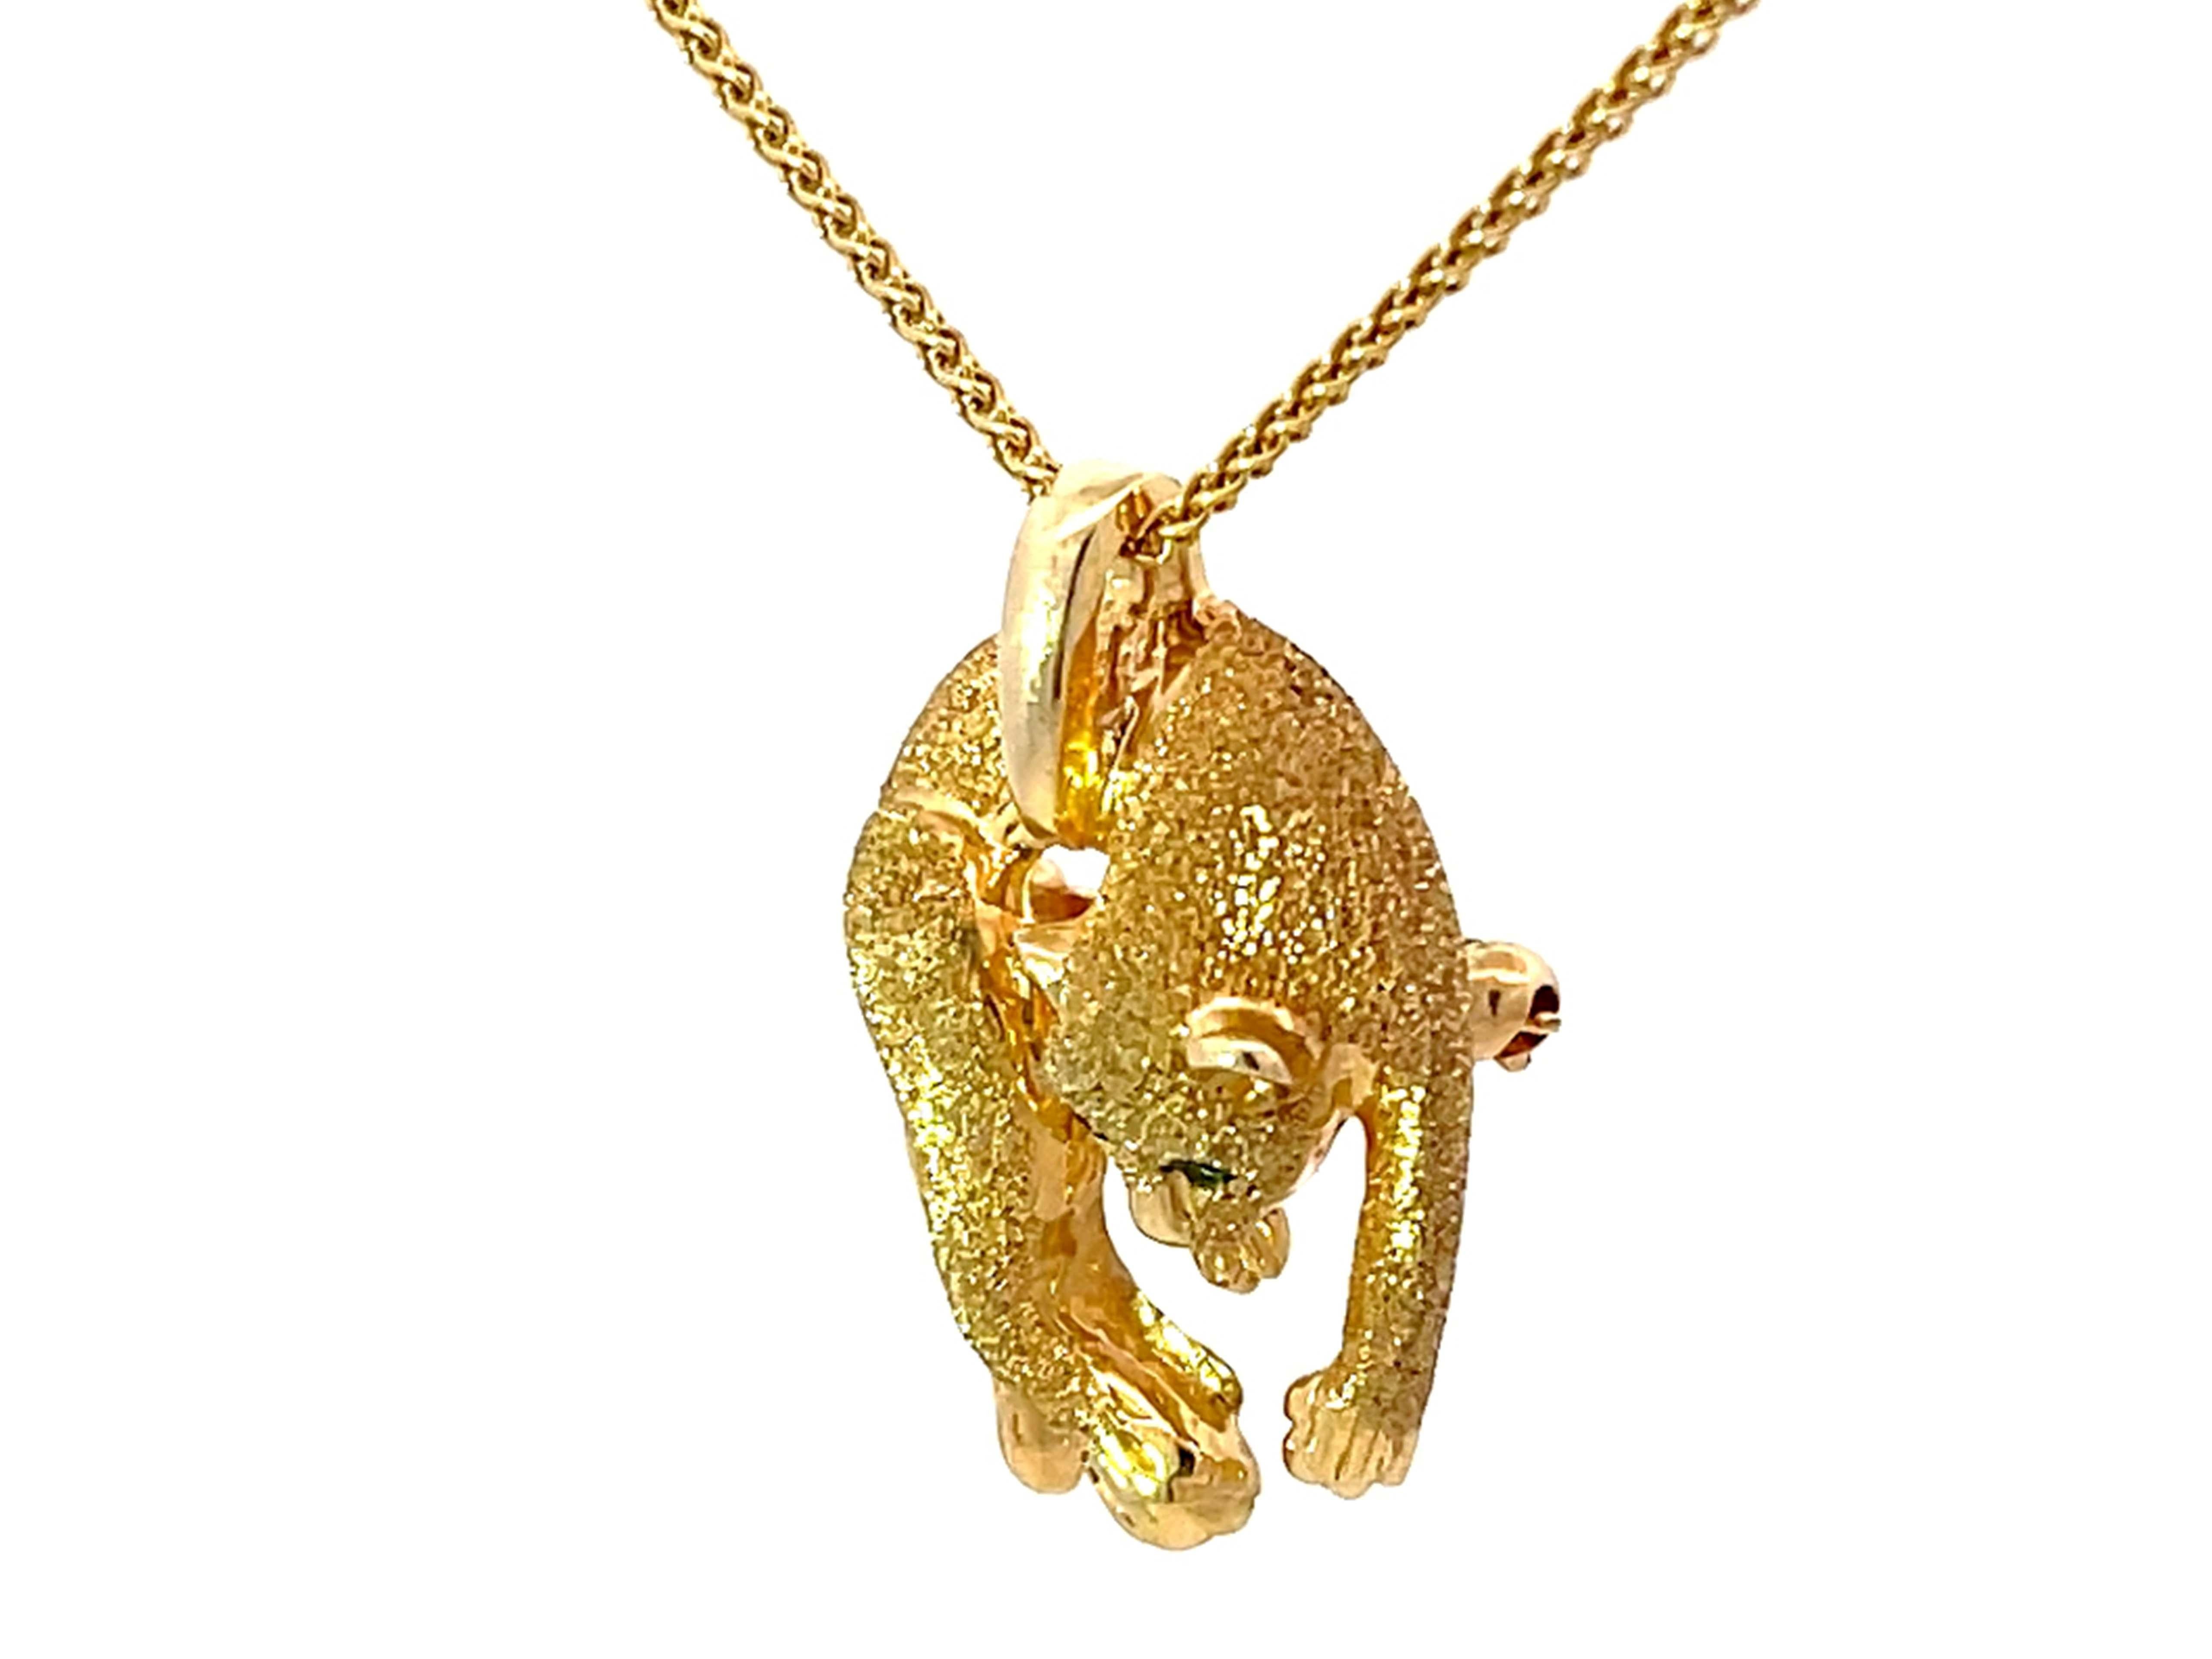 Modern 14K Solid Gold Emerald Eyes Cheetah Cat Pendant/Brooch Necklace